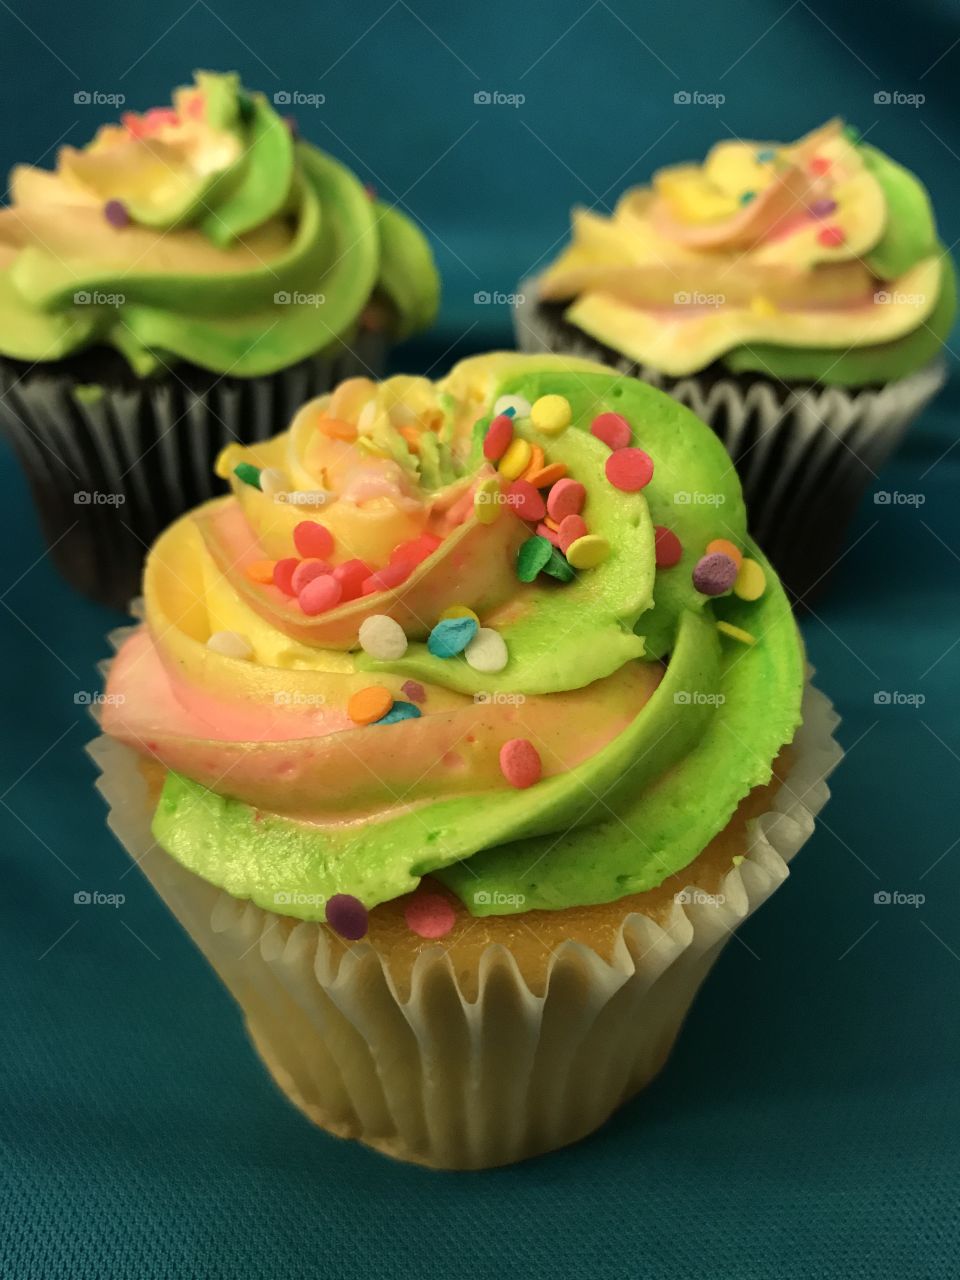 Bright, happy cupcakes 